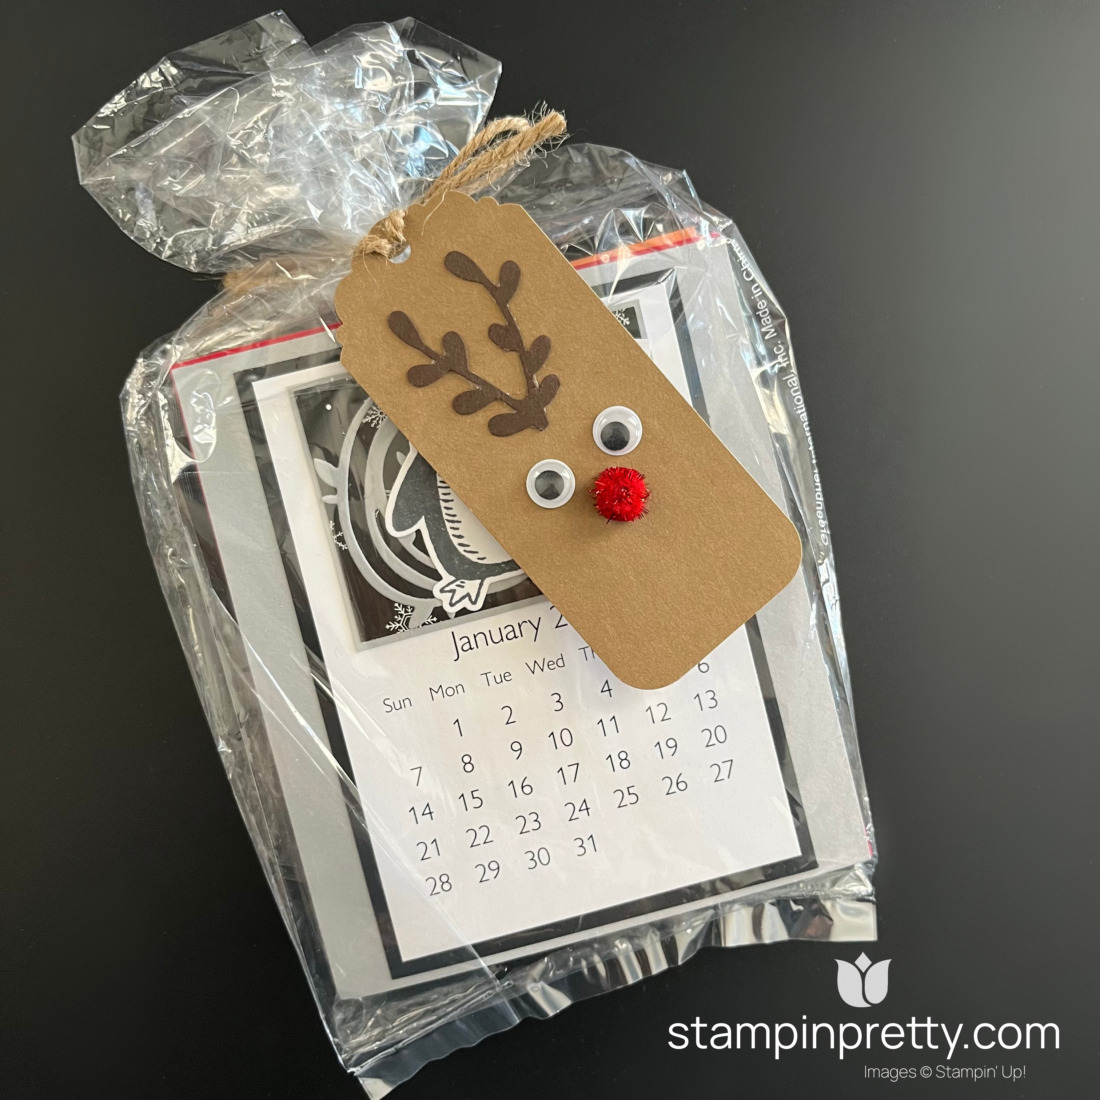 How to use the Calendar Builder stamp set